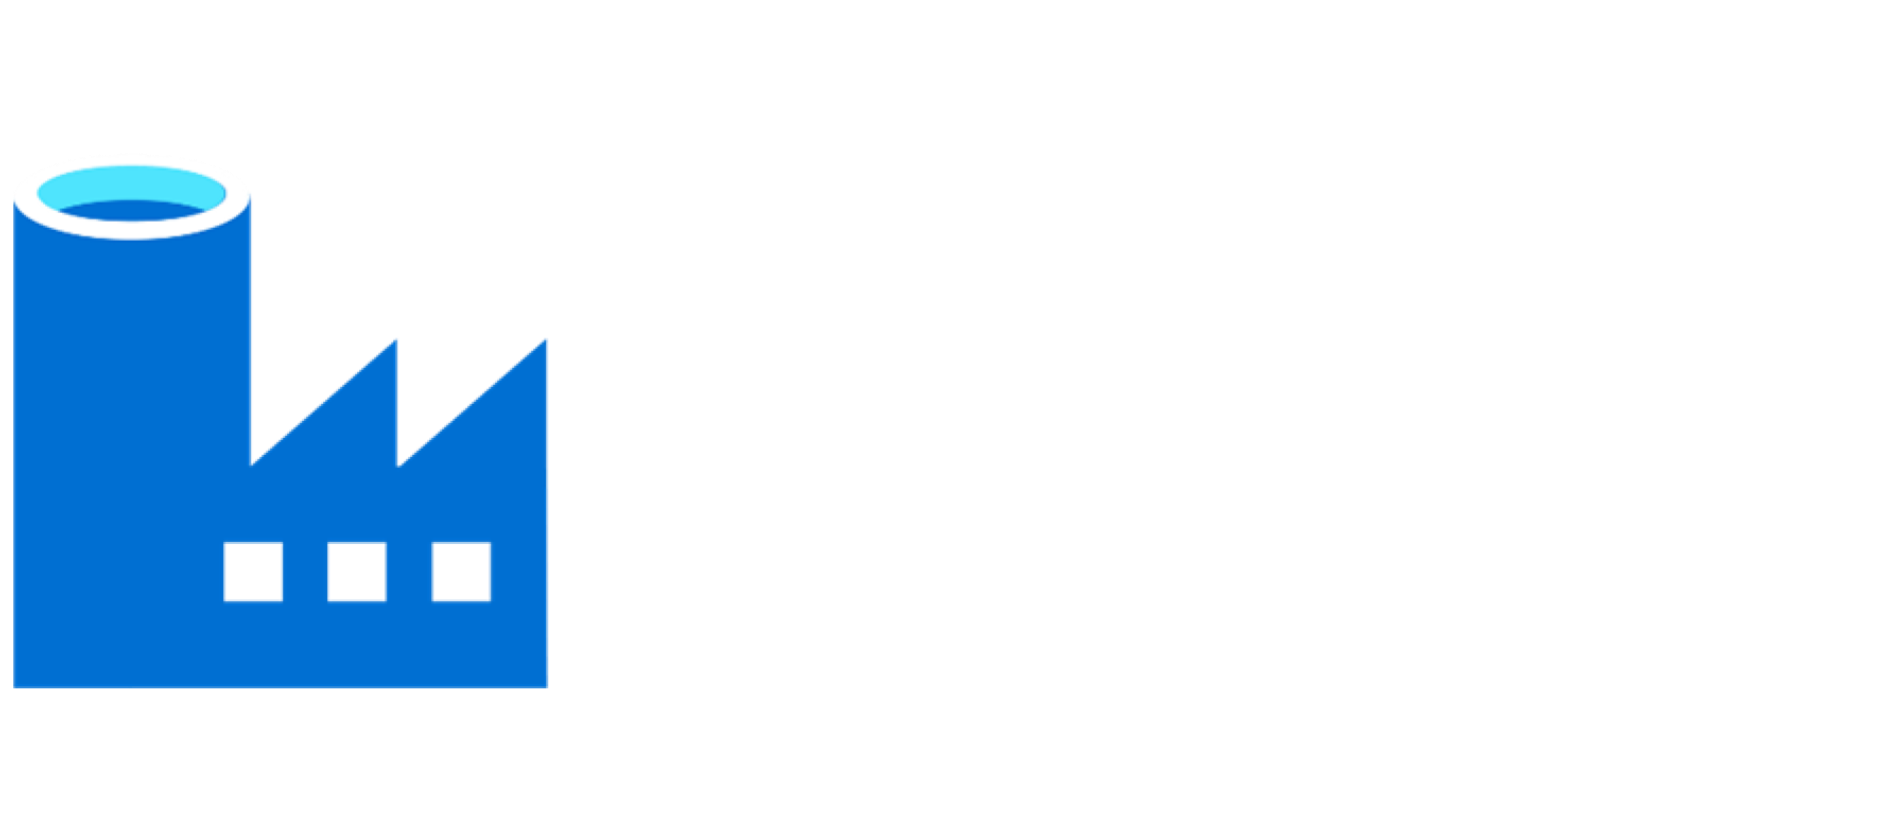 Azure Data Factory white text